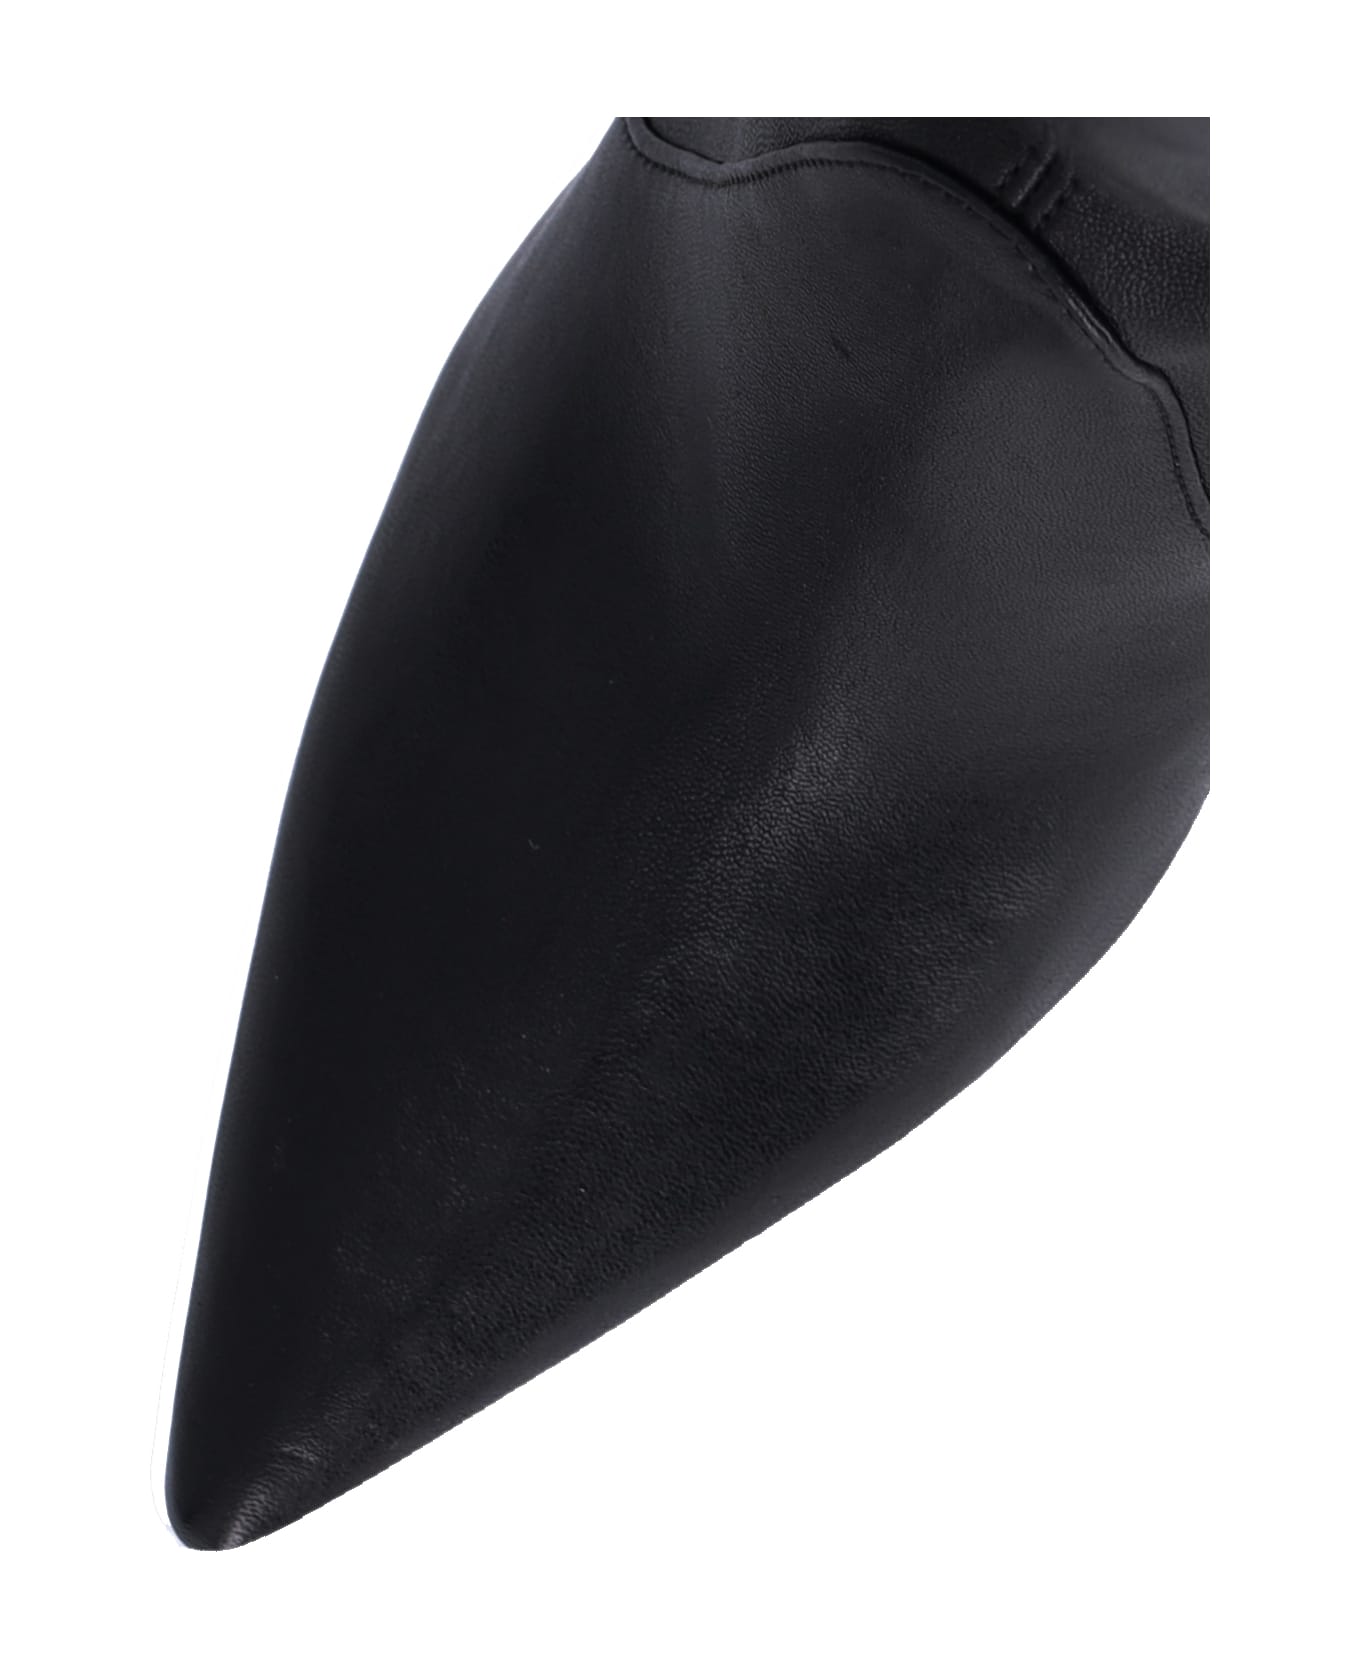 Stuart Weitzman High Boots "ultrastuart" - Black   ブーツ